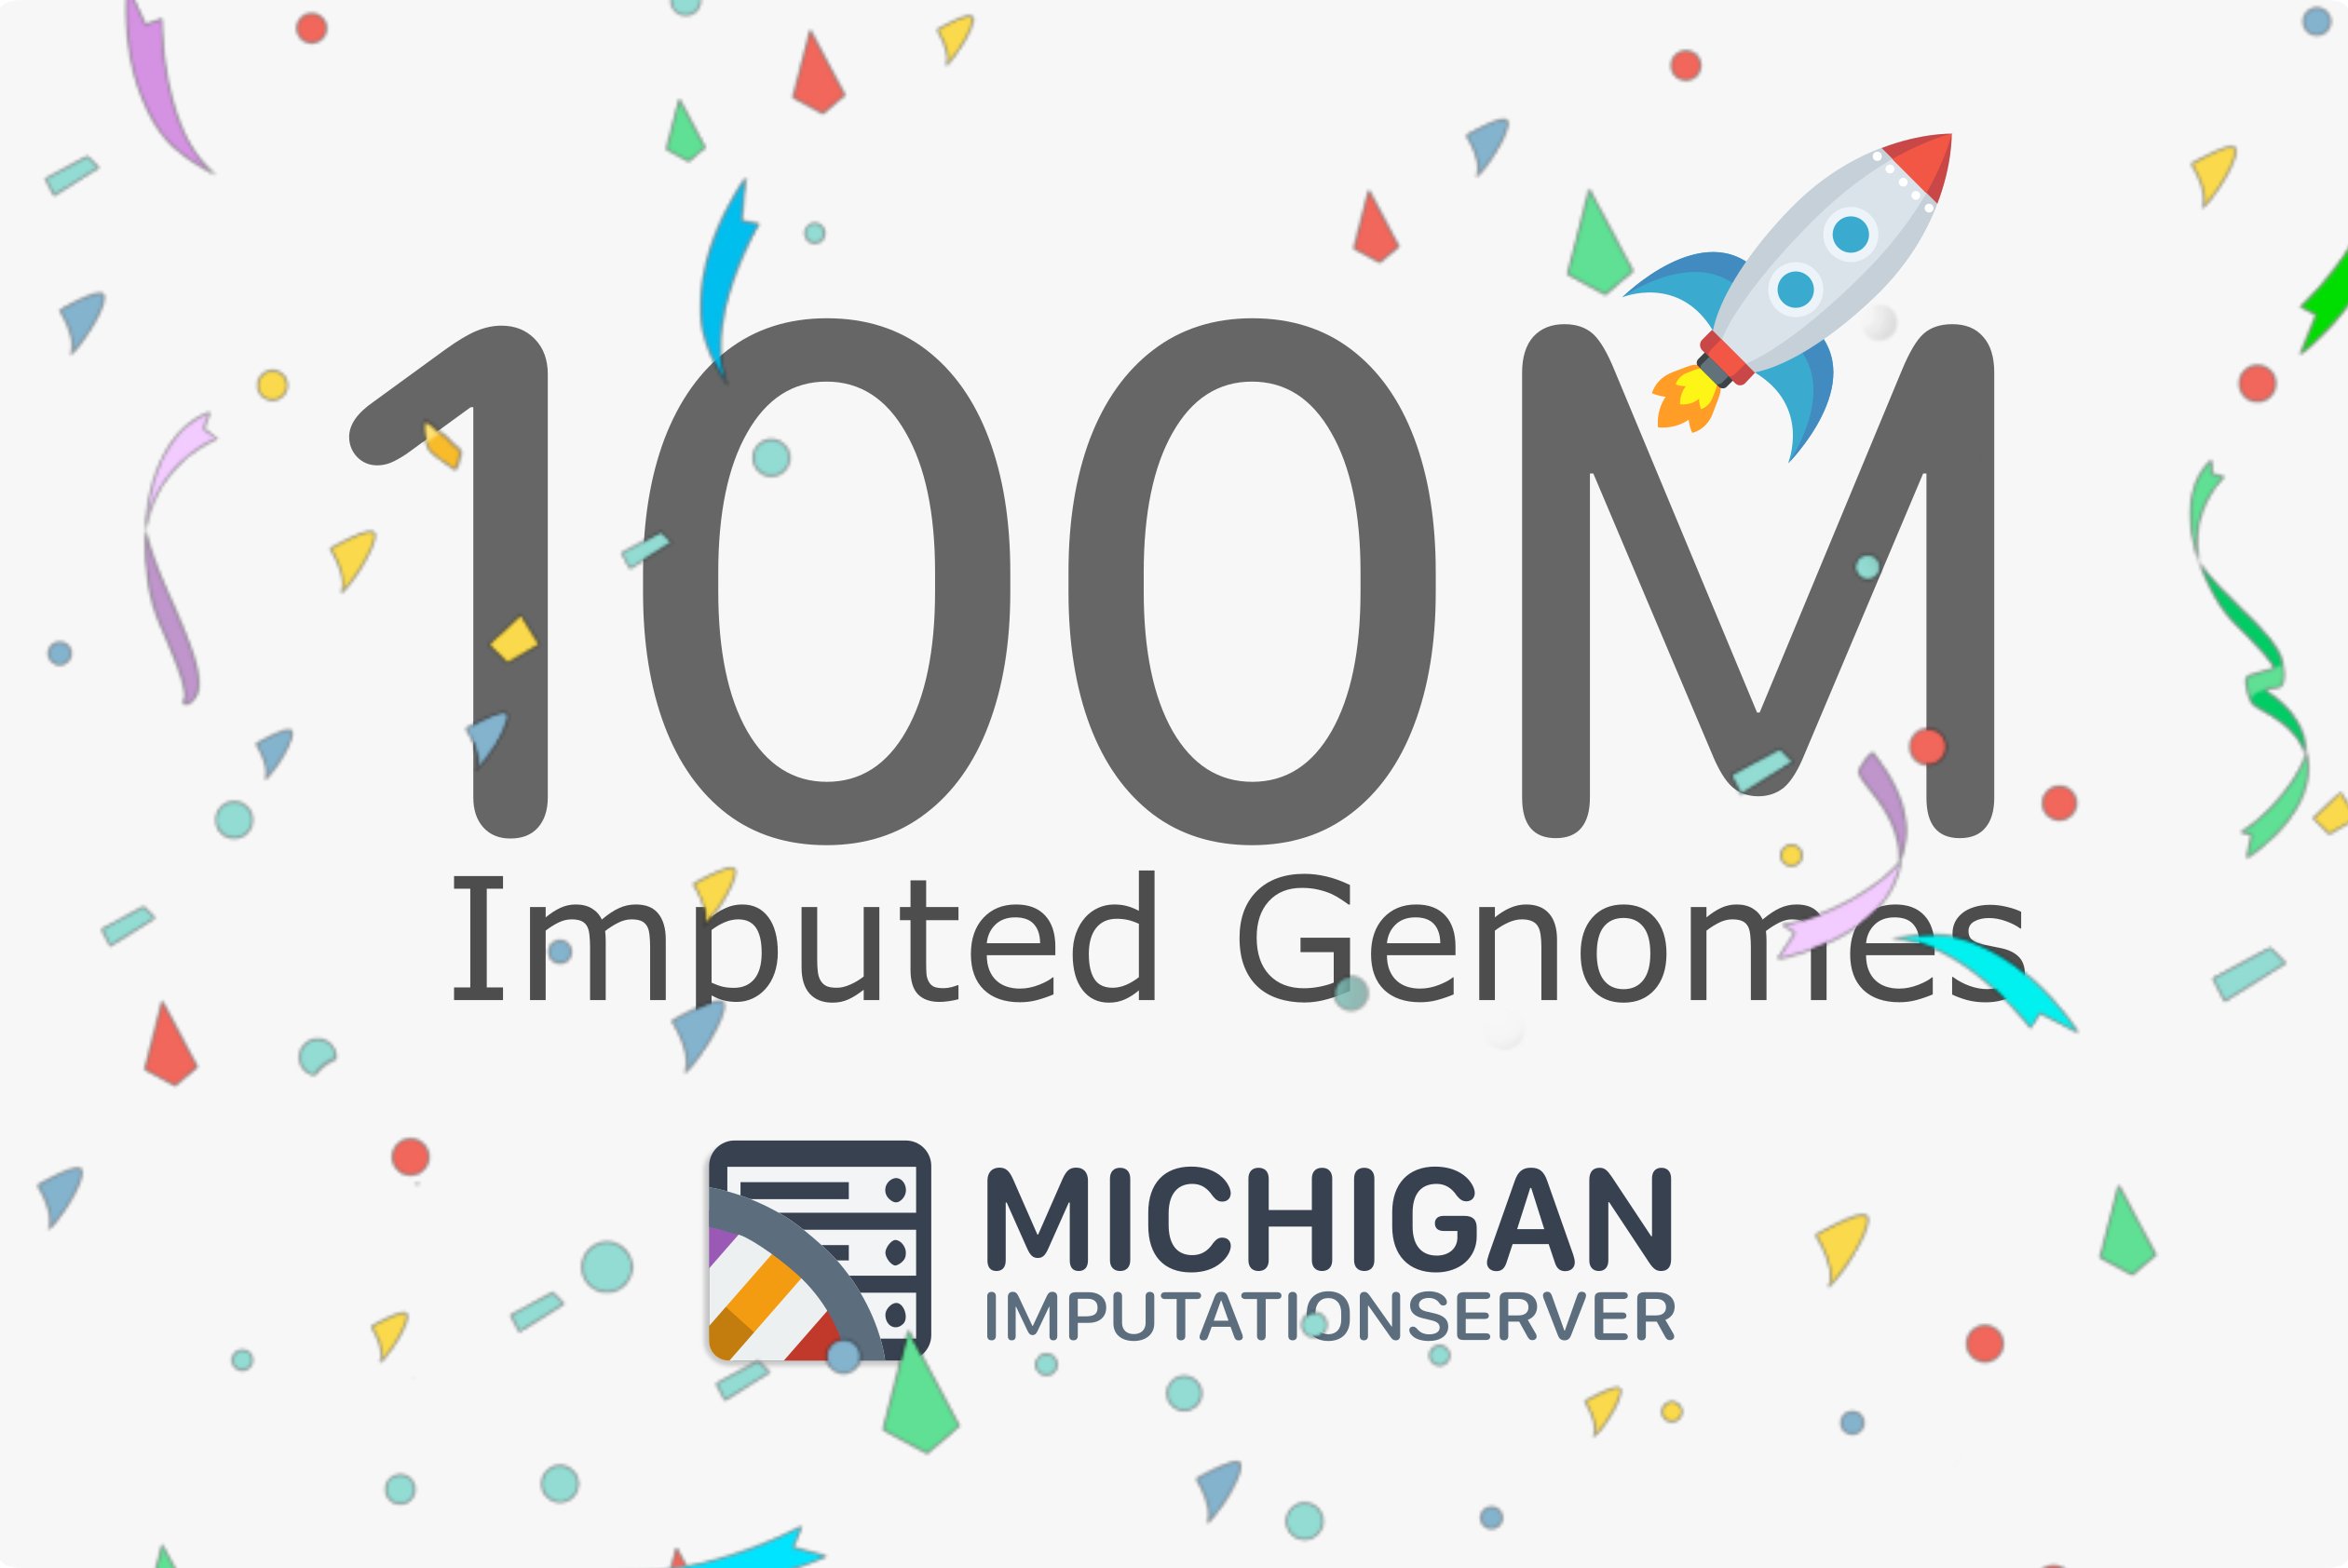 1000 Million Imputed Genomes